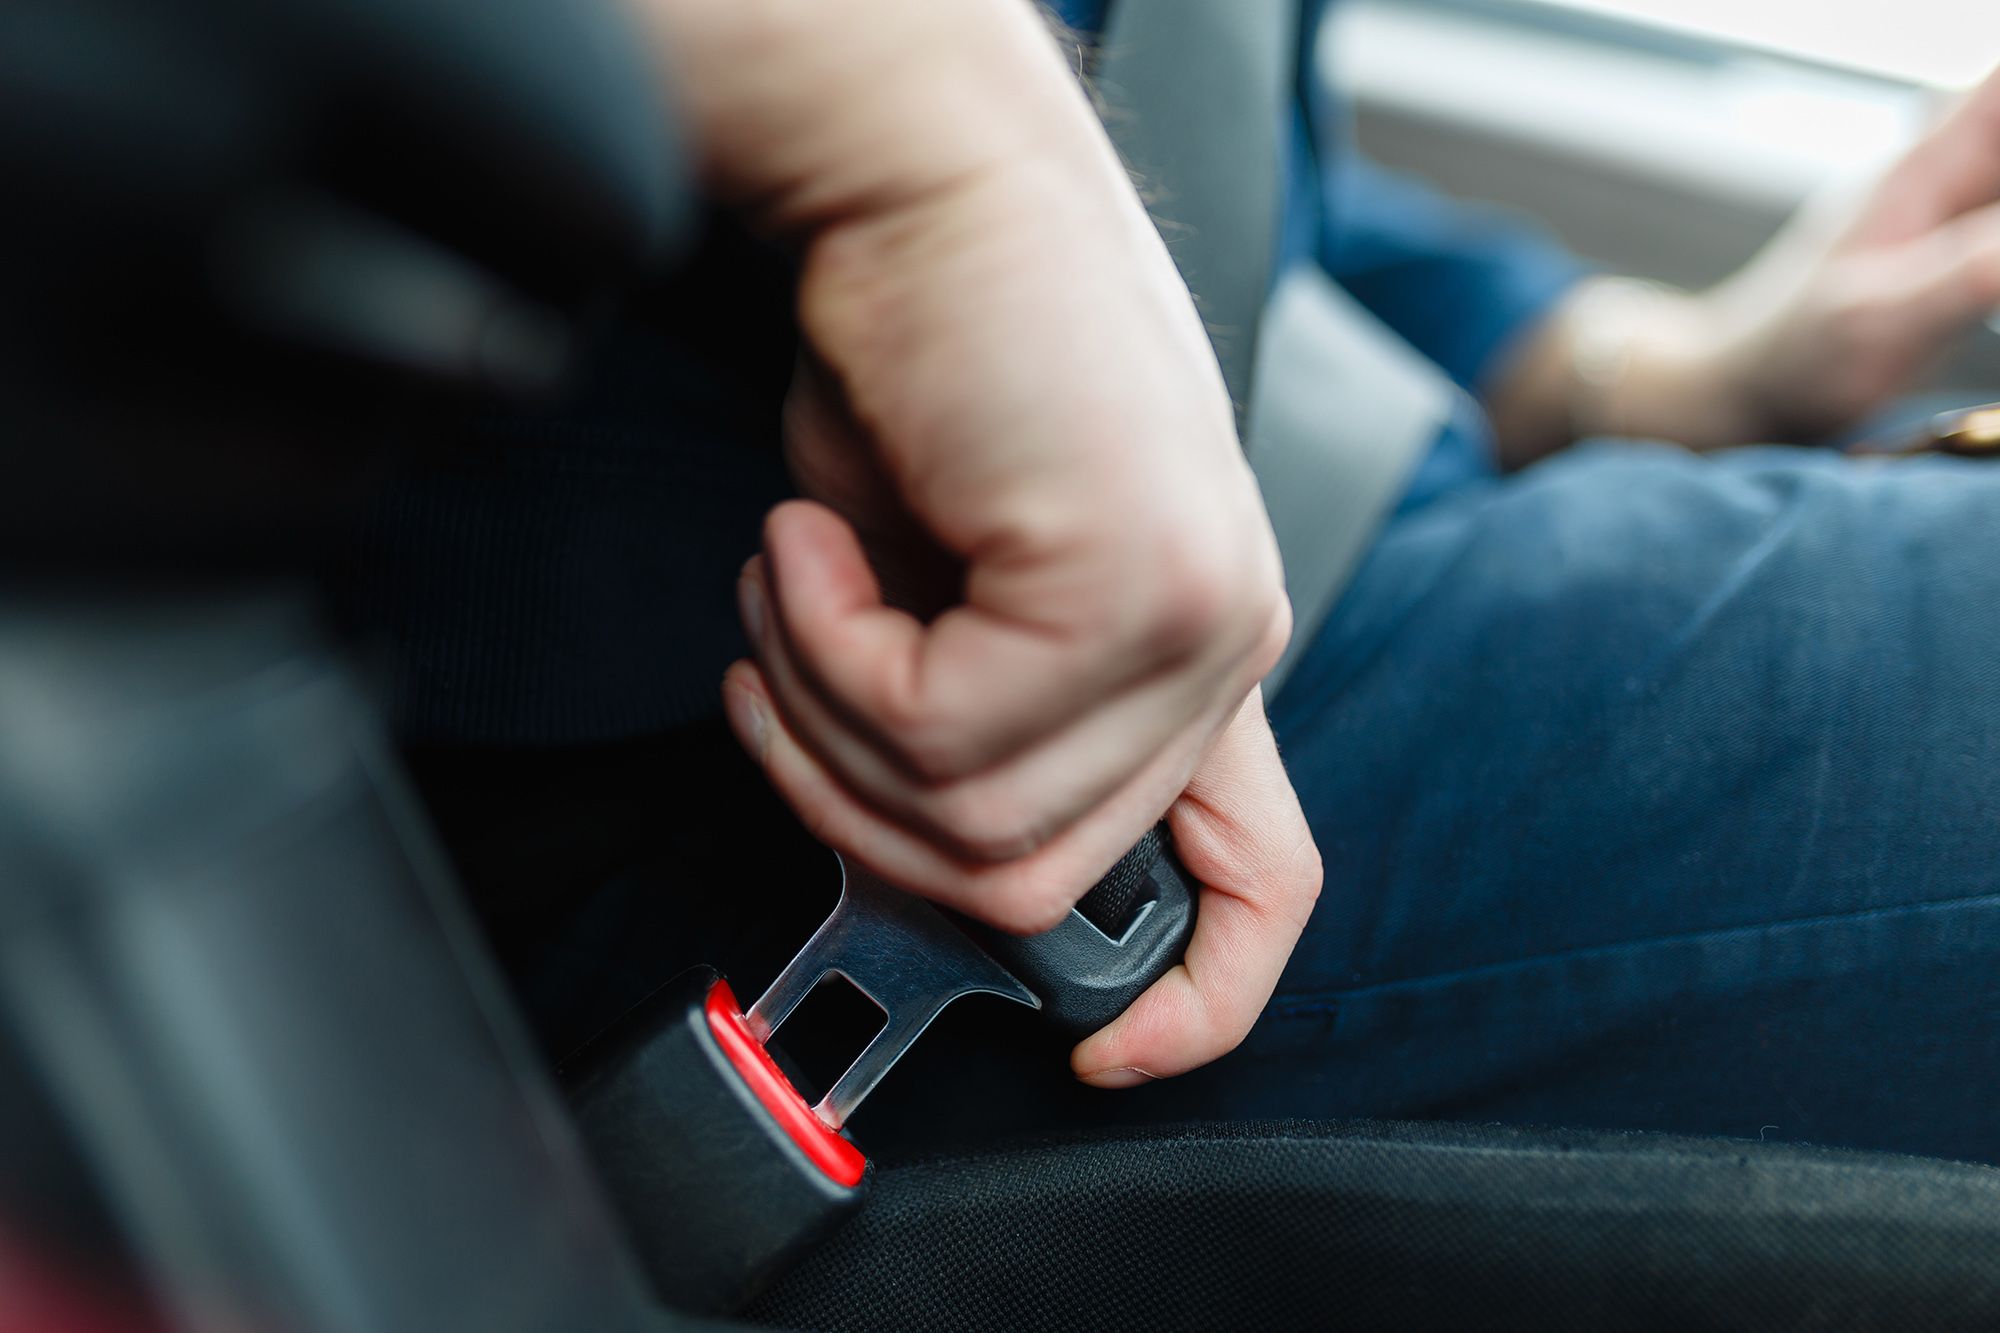 Law enforcement launches seat belt blitz in West Virginia - WV MetroNews